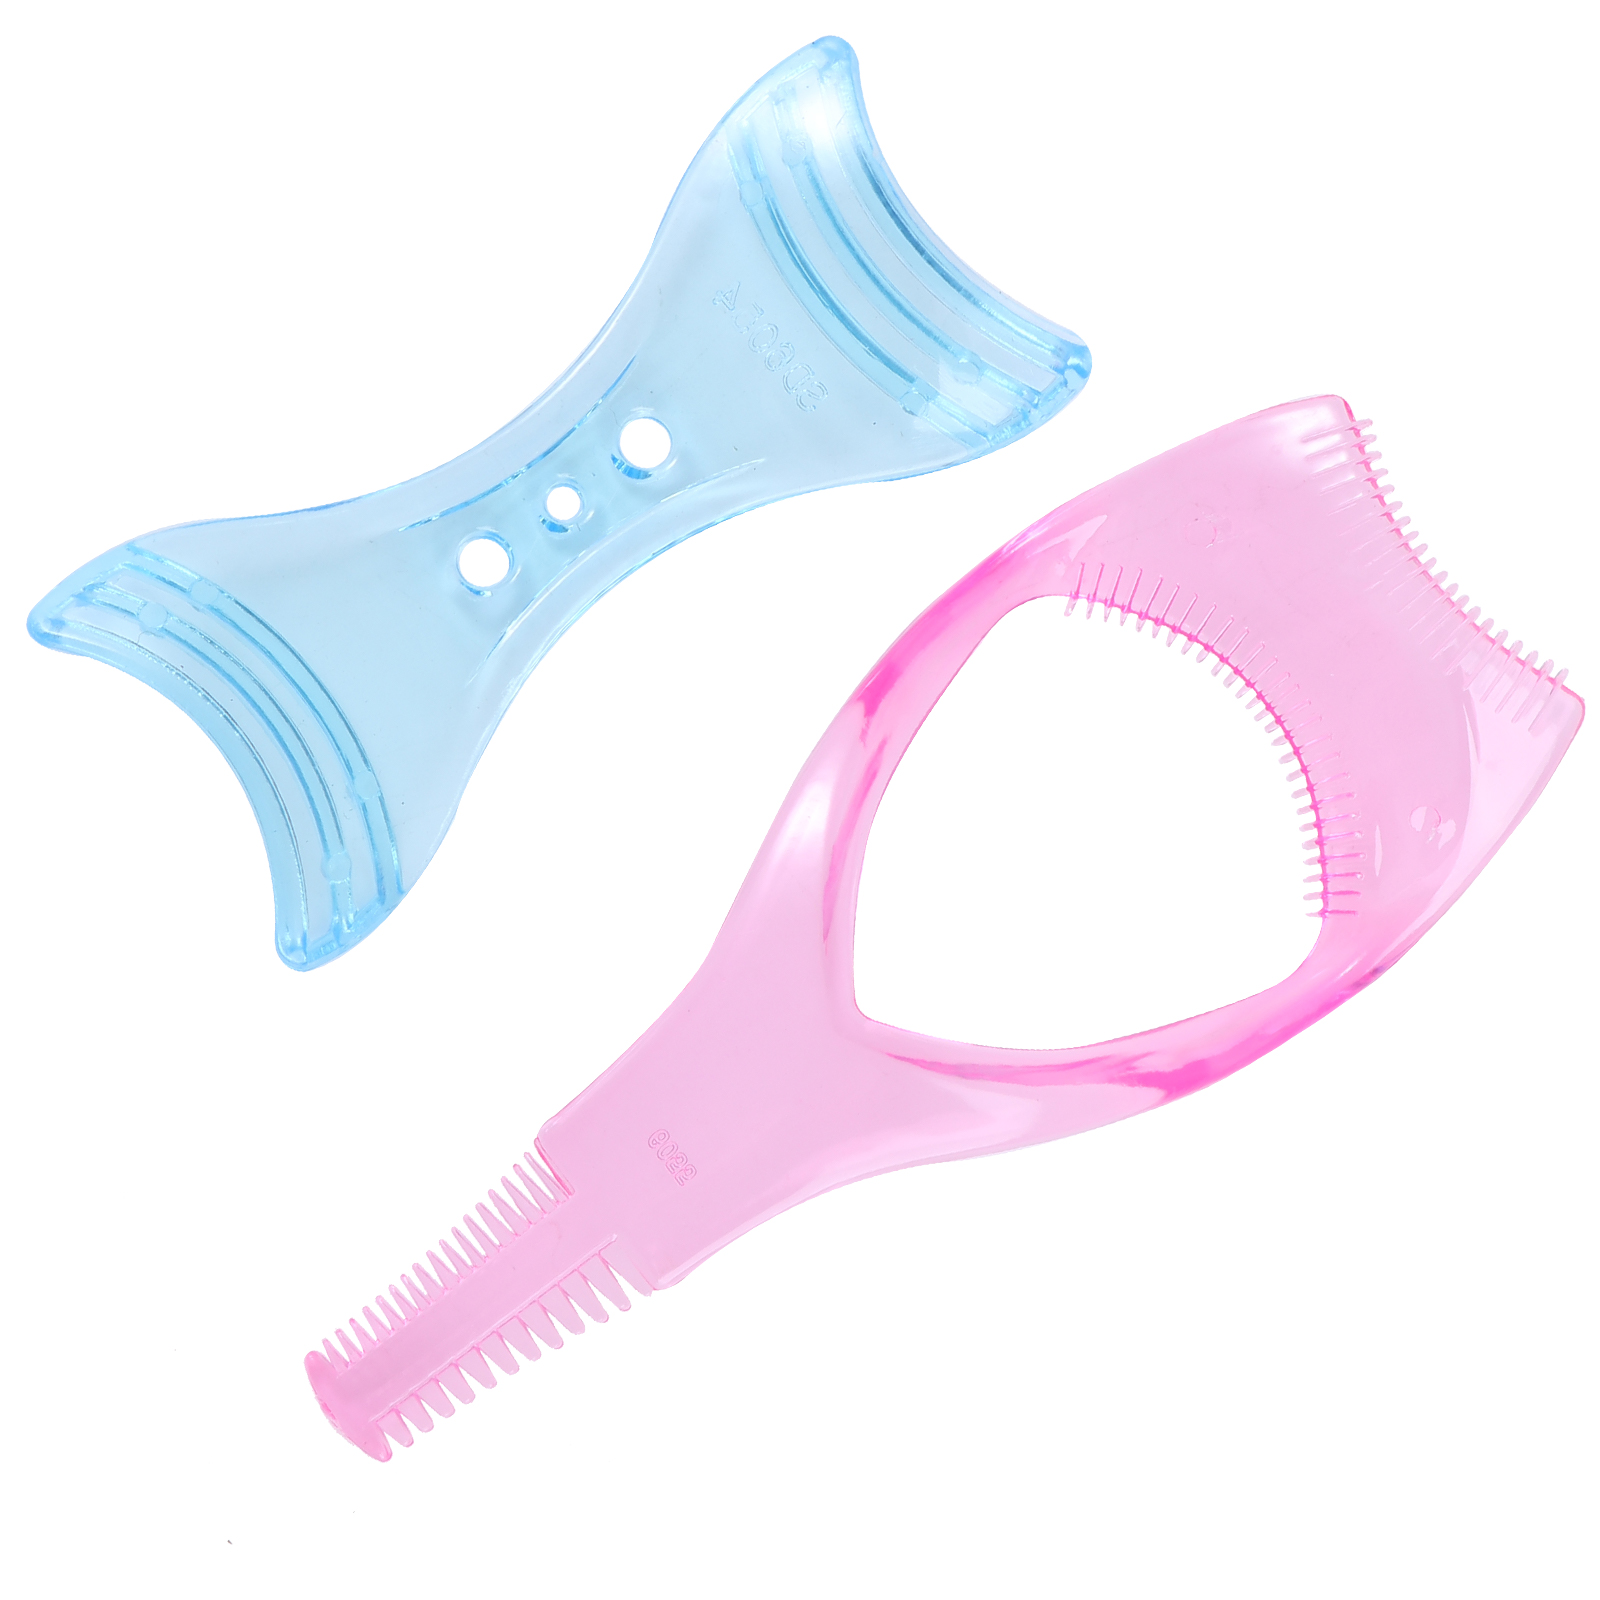 2pcs Mascara Eyelash Comb Applicator Template Eyeliner Models Guide Stencil Tool (Random Color)